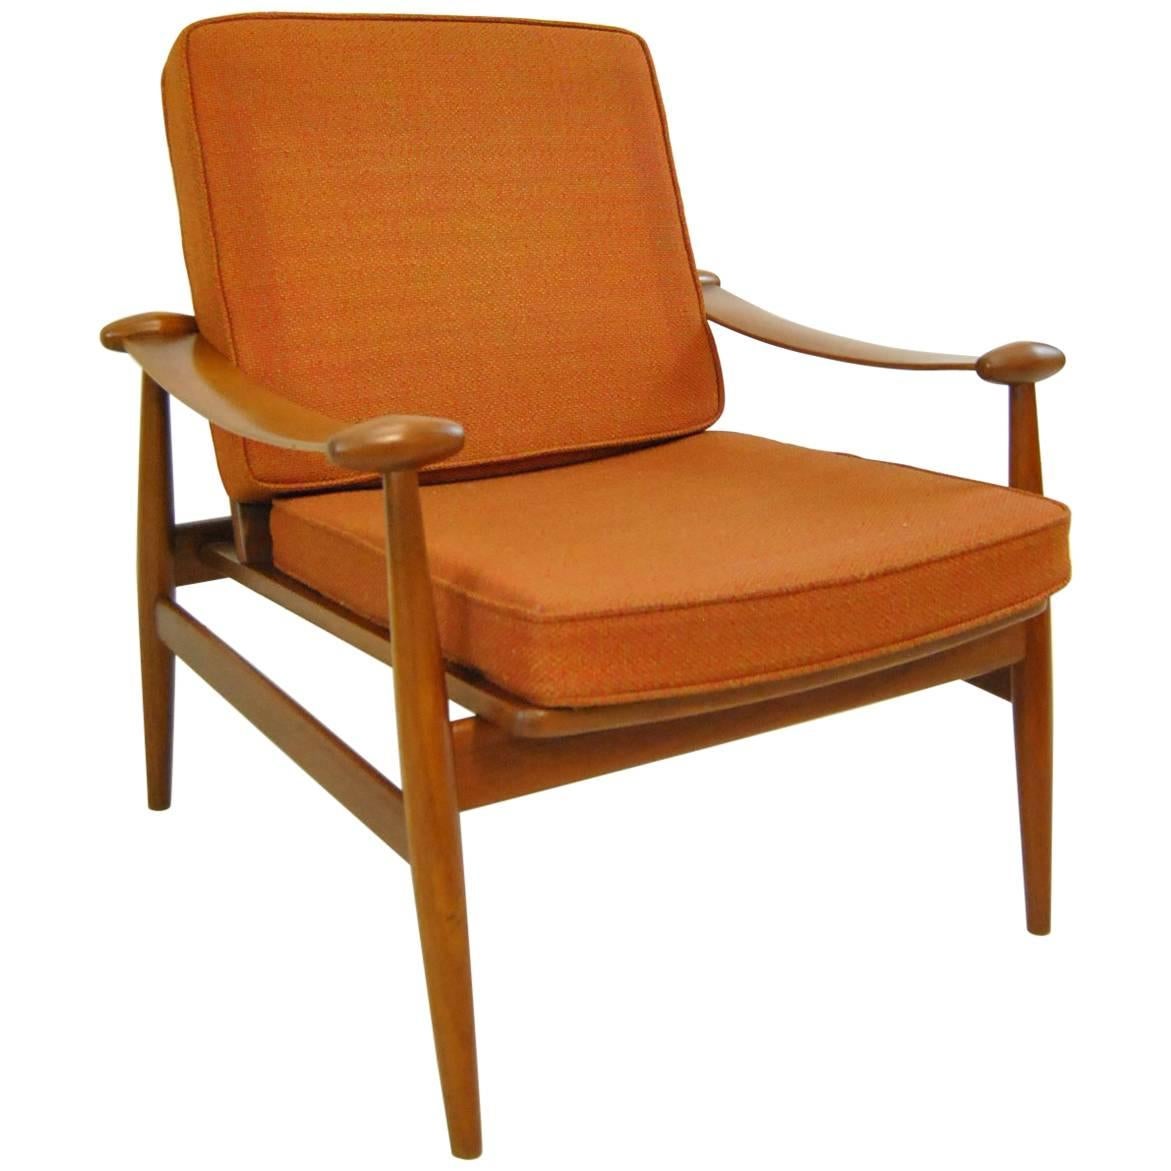 Mid-Century Modern "Spade" Chair by Finn Juhl for John Stuart Inc. Model 133